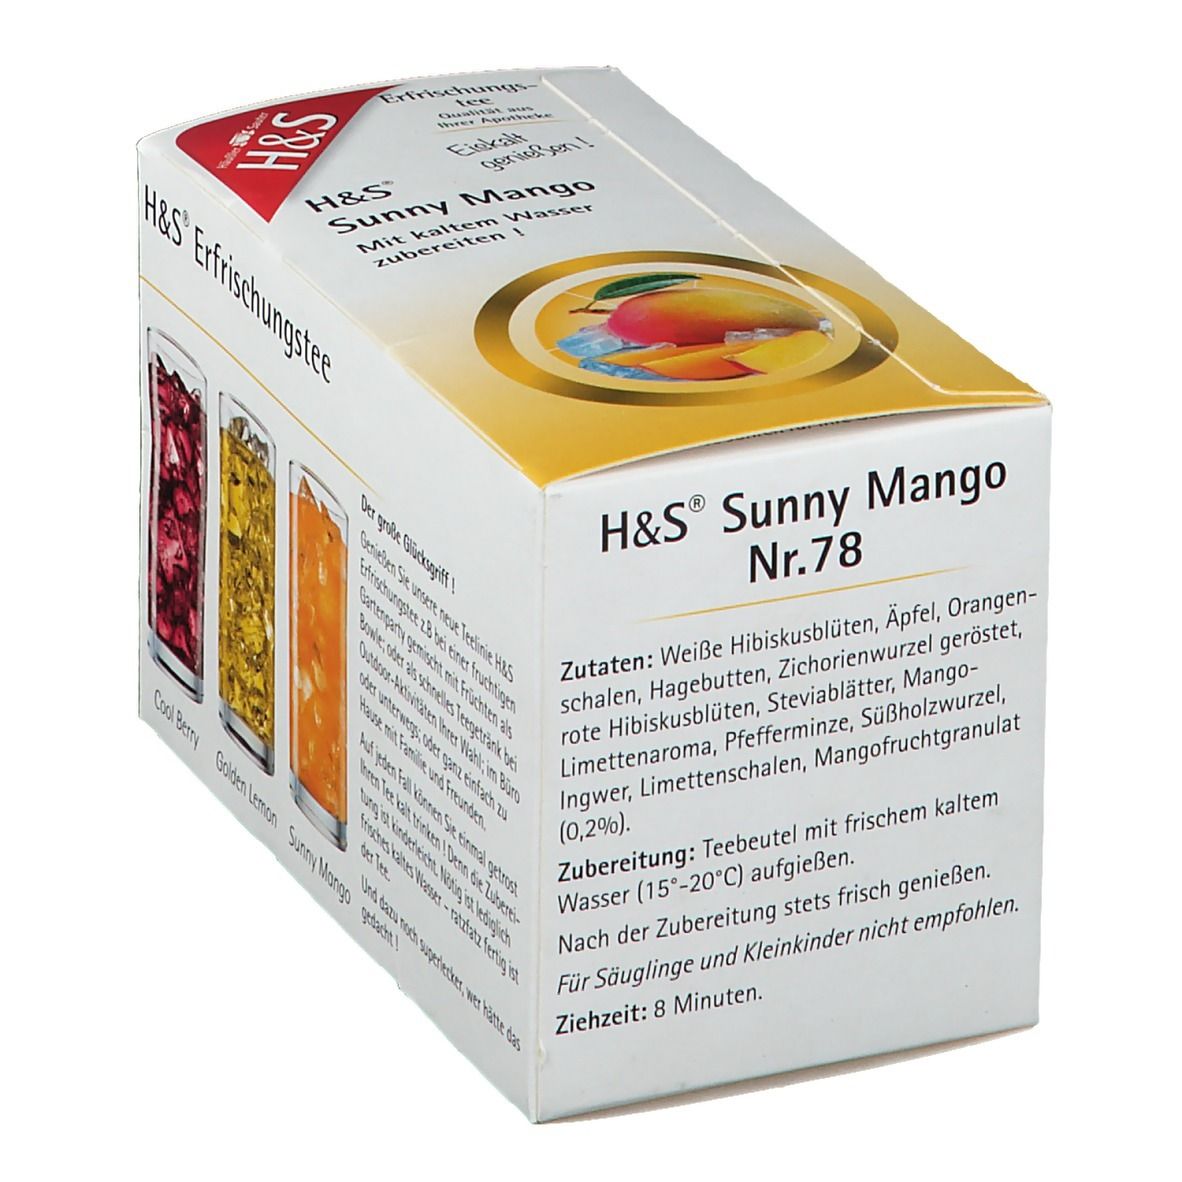 H&S Sunny Mango Erfrischungstee Nr. 78